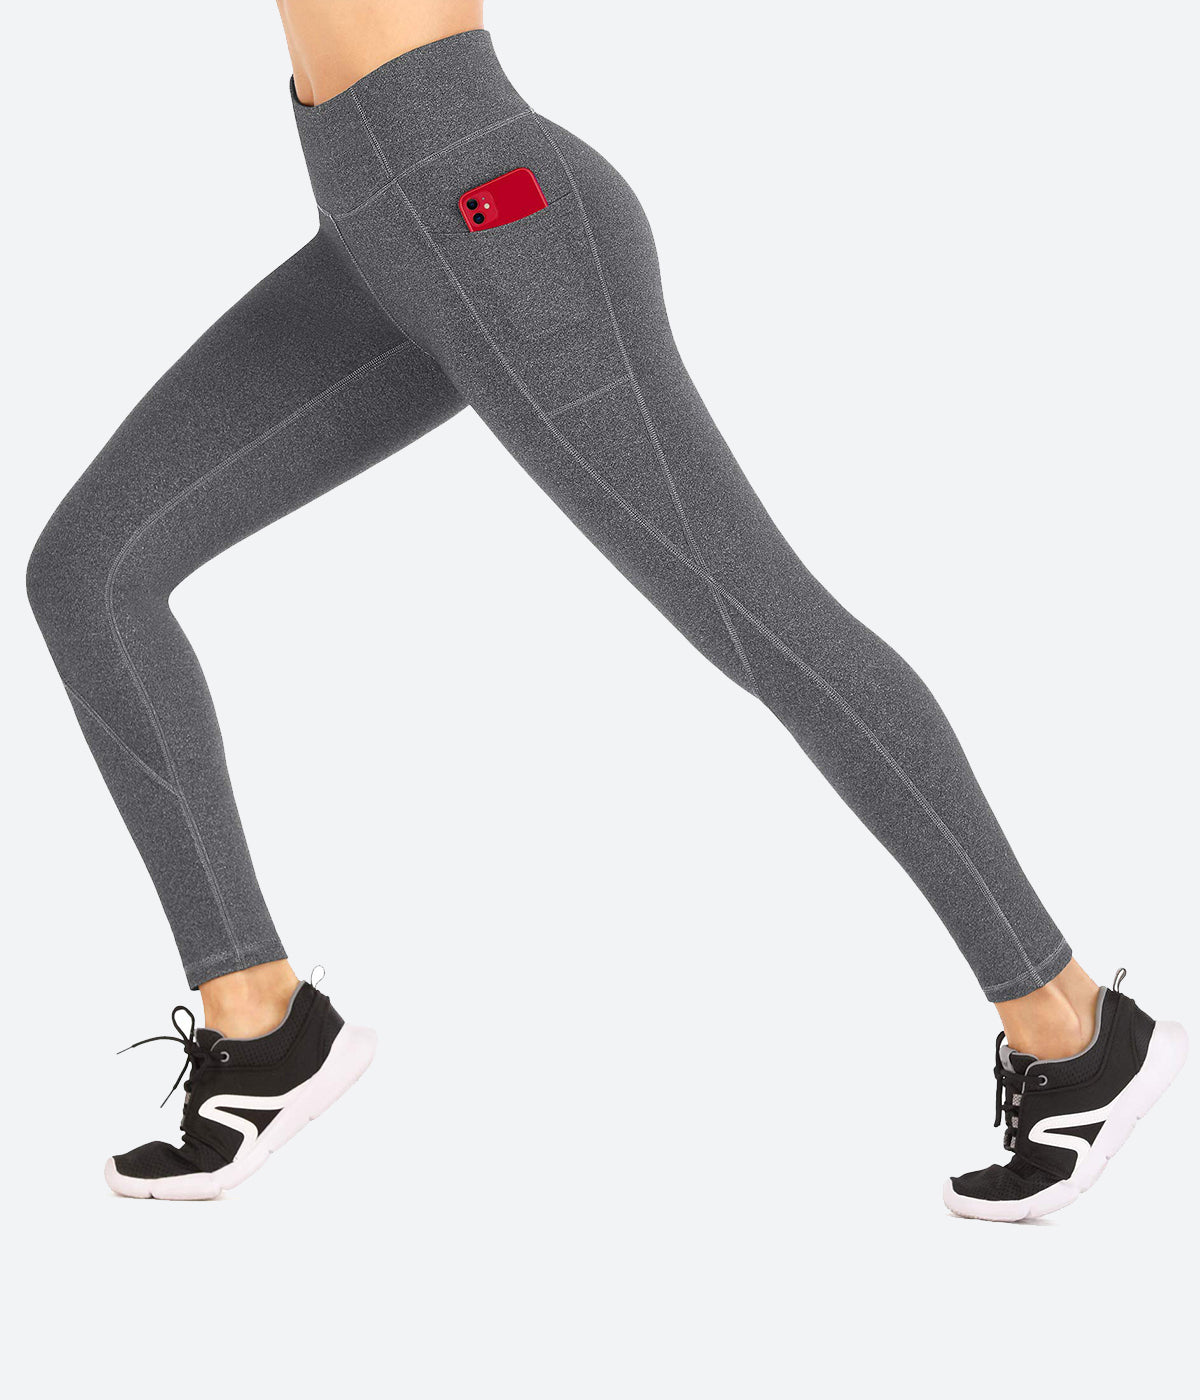 Buy Heathyoga Leggings with Pockets for Women Tummy Control High